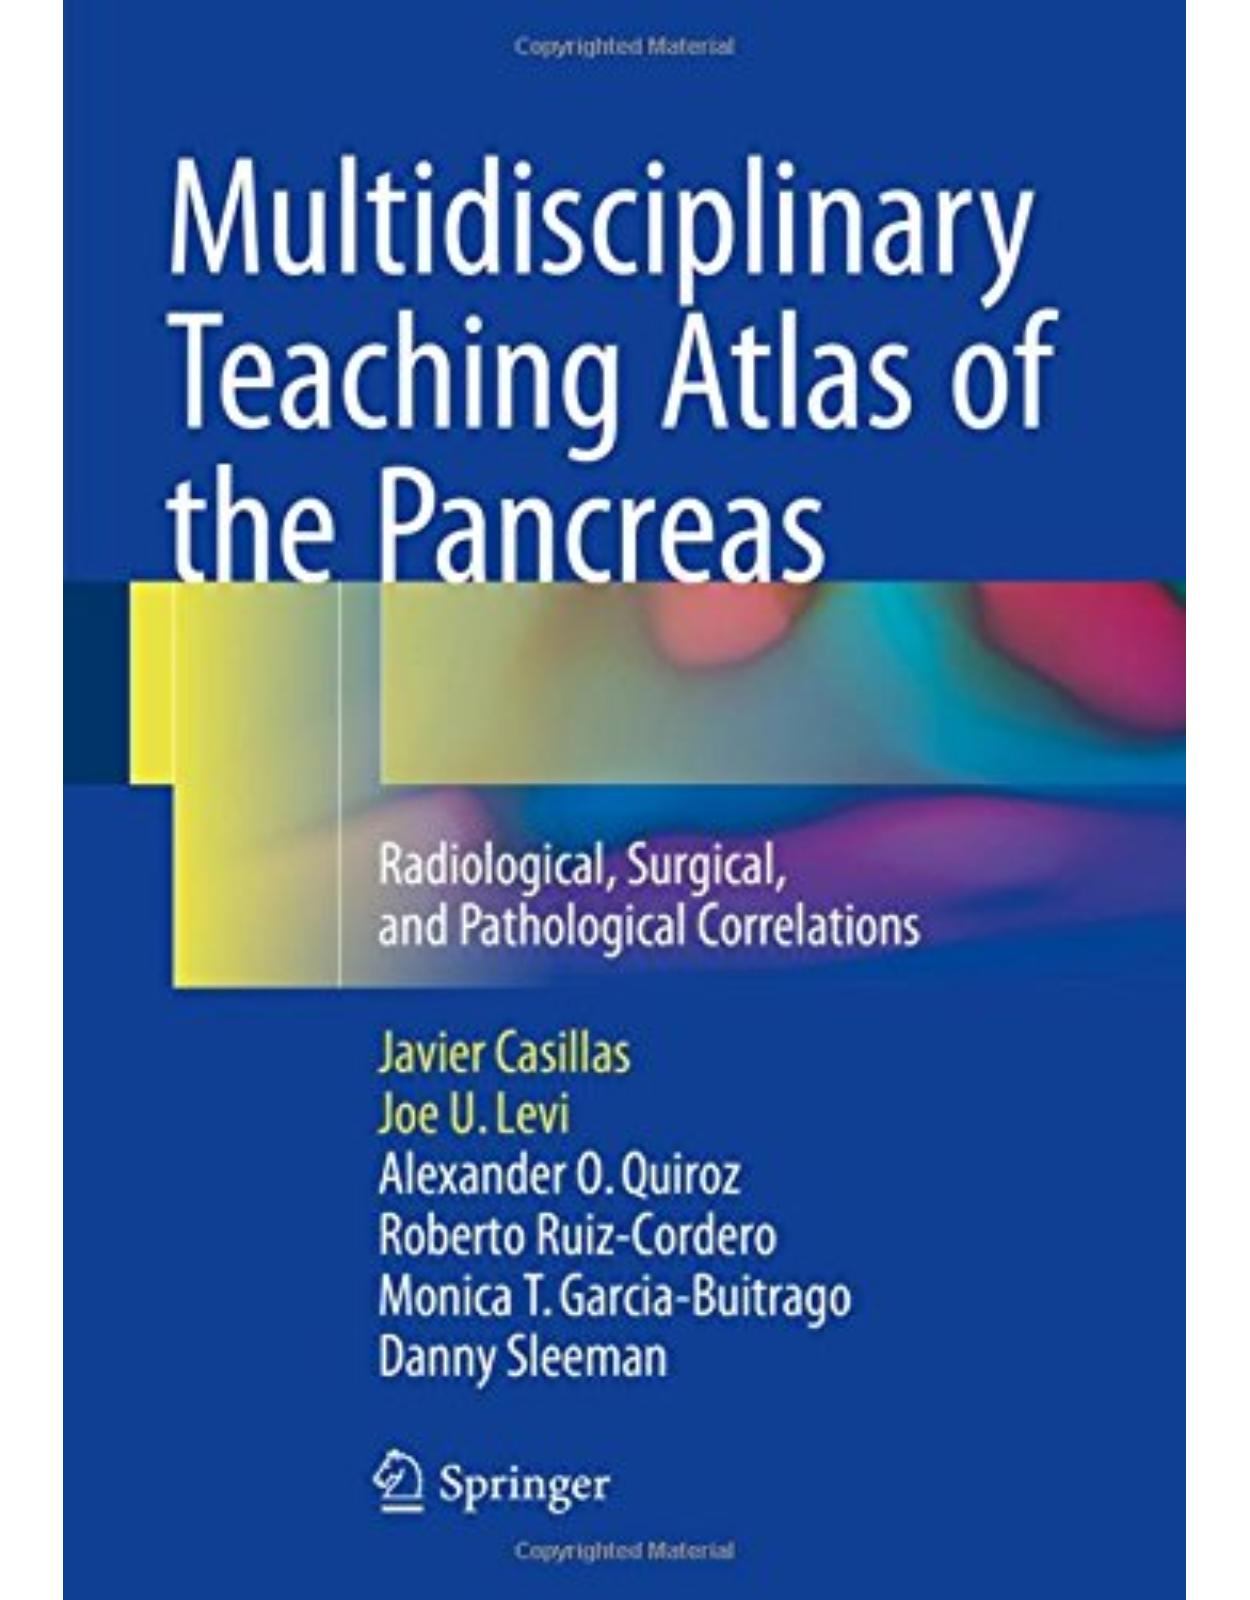 Multidisciplinary Teaching Atlas of the Pancreas. Radiological, Surgical, and Pathological Correlations